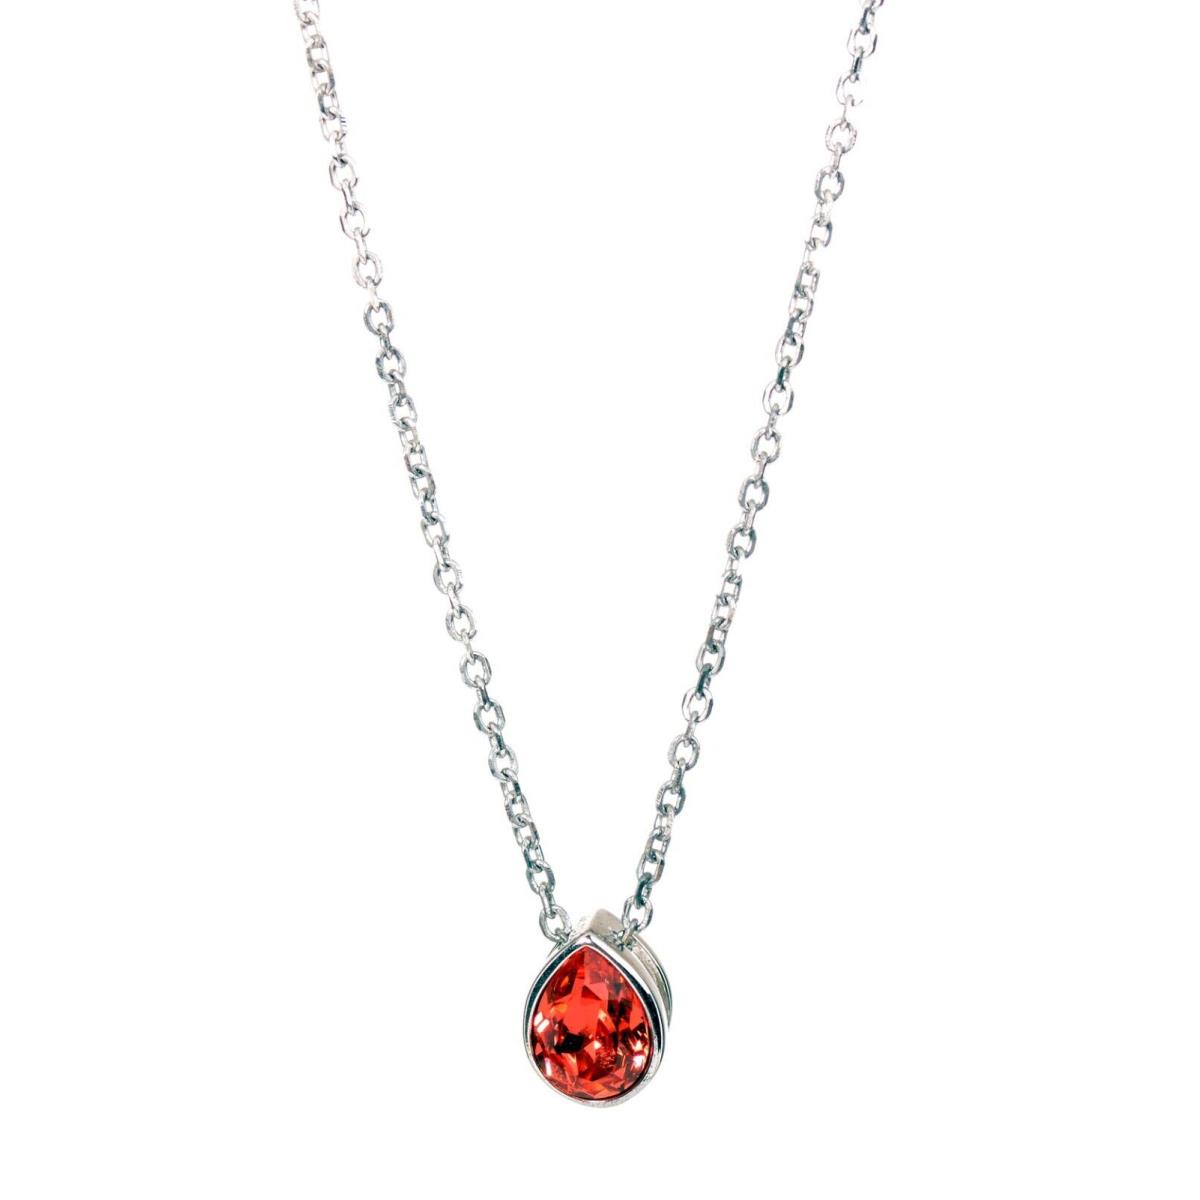 Crystals From Swarovski Mini Teardrop Pendant Necklace 925 Sterling Silver 1157i